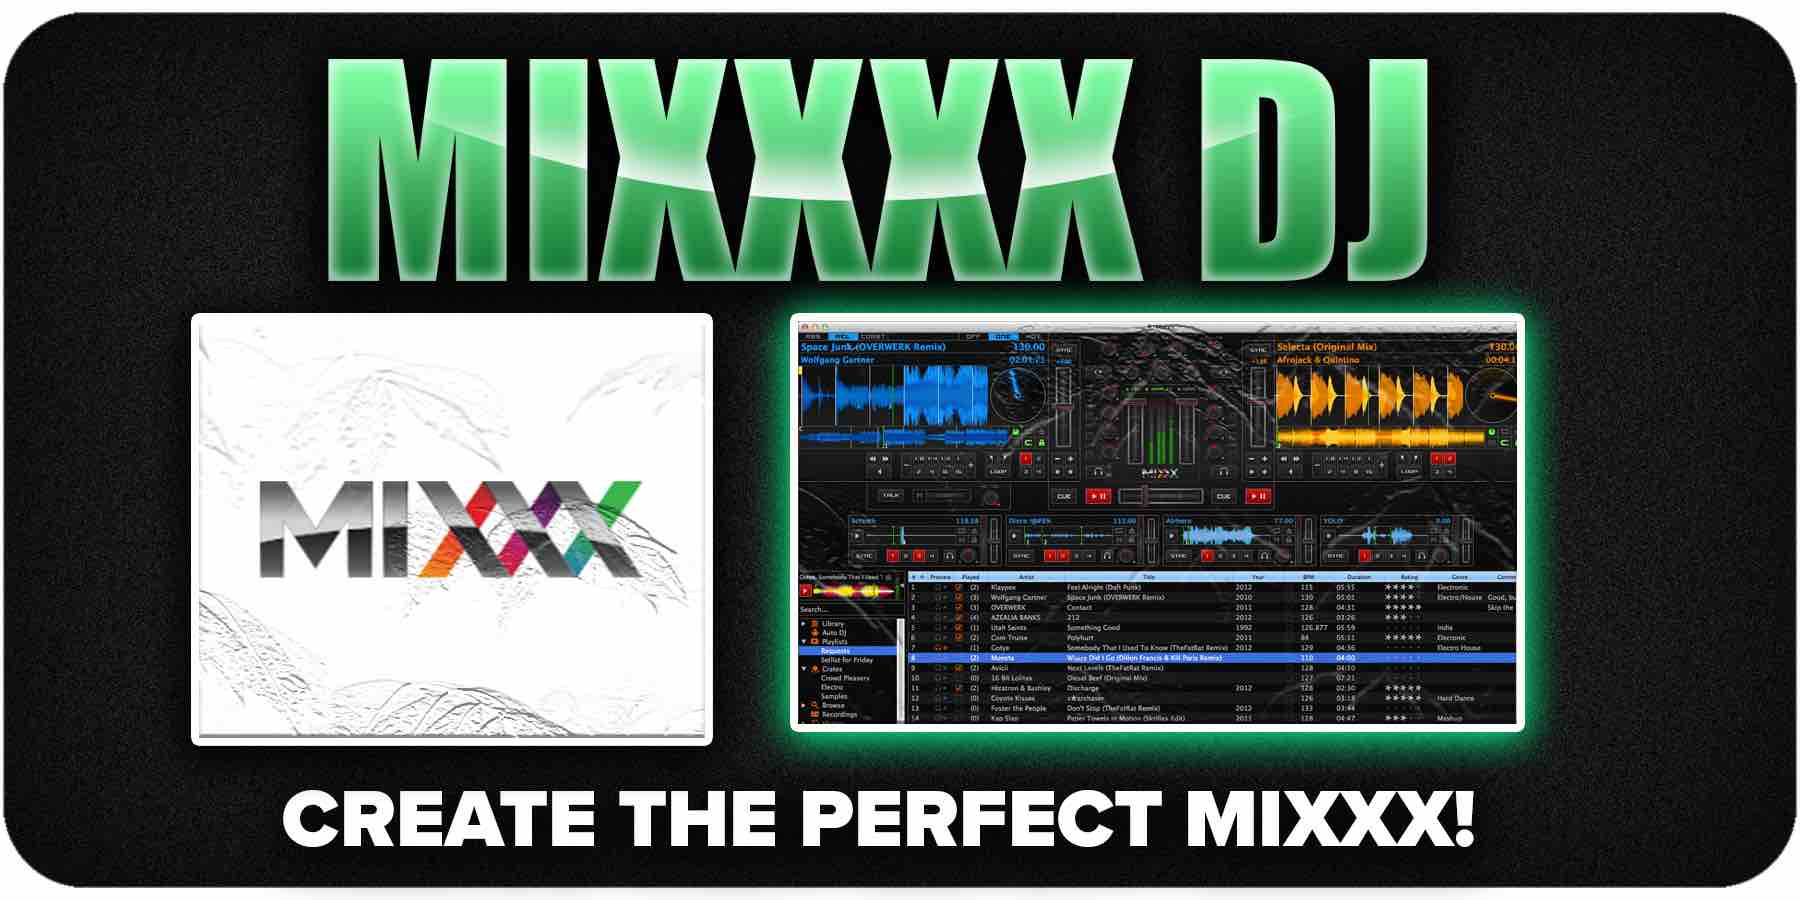 Mixxx DJ Mixing Software